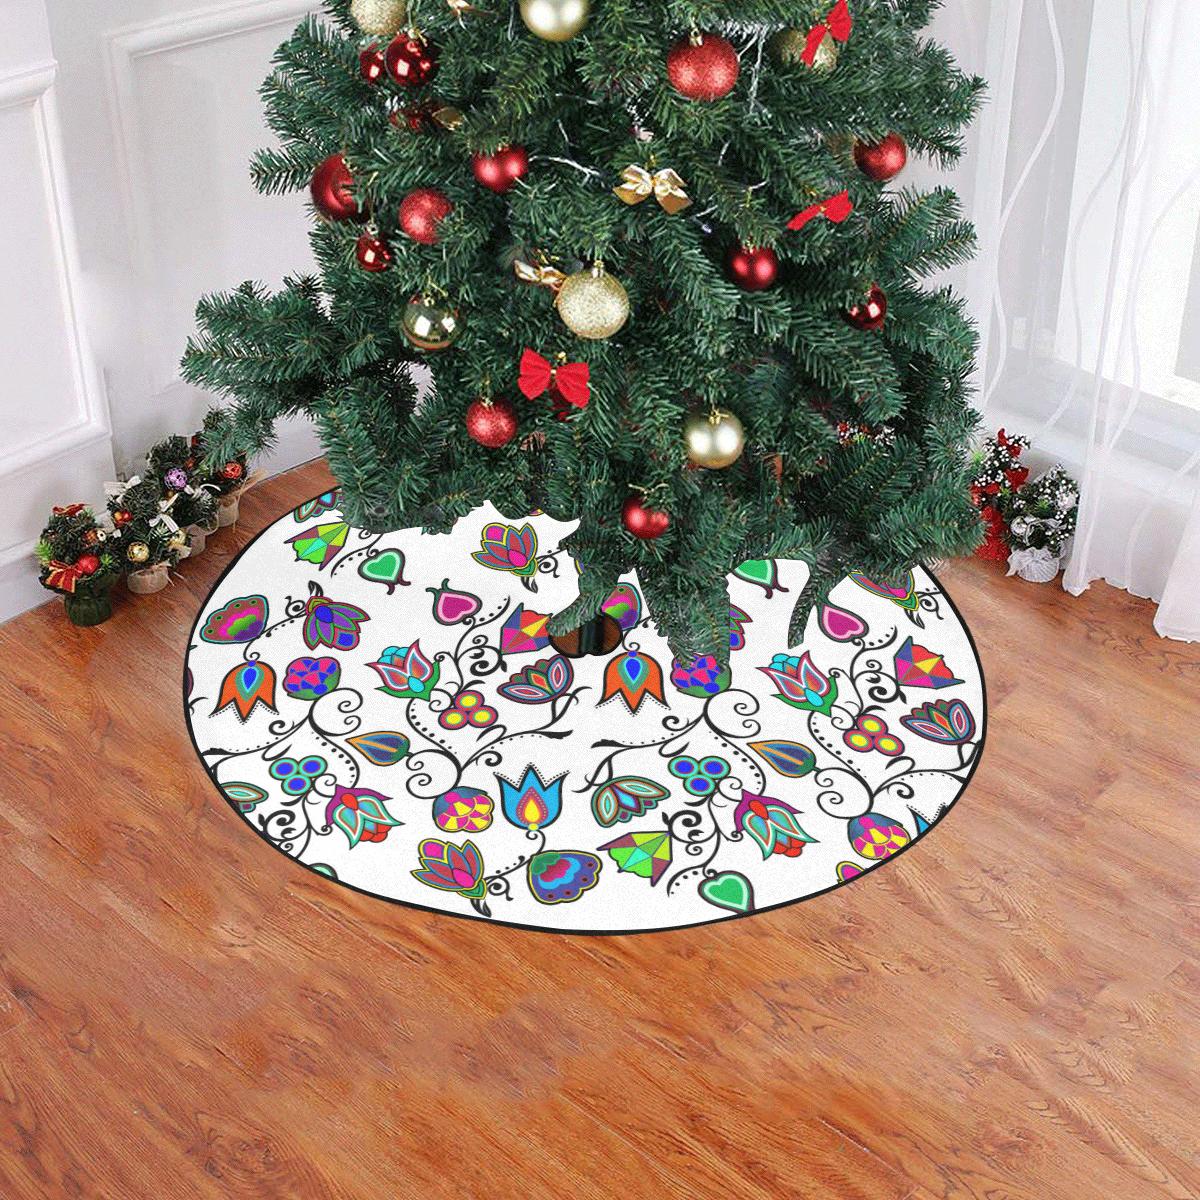 Indigenous Paisley - White Christmas Tree Skirt 47" x 47" Christmas Tree Skirt e-joyer 